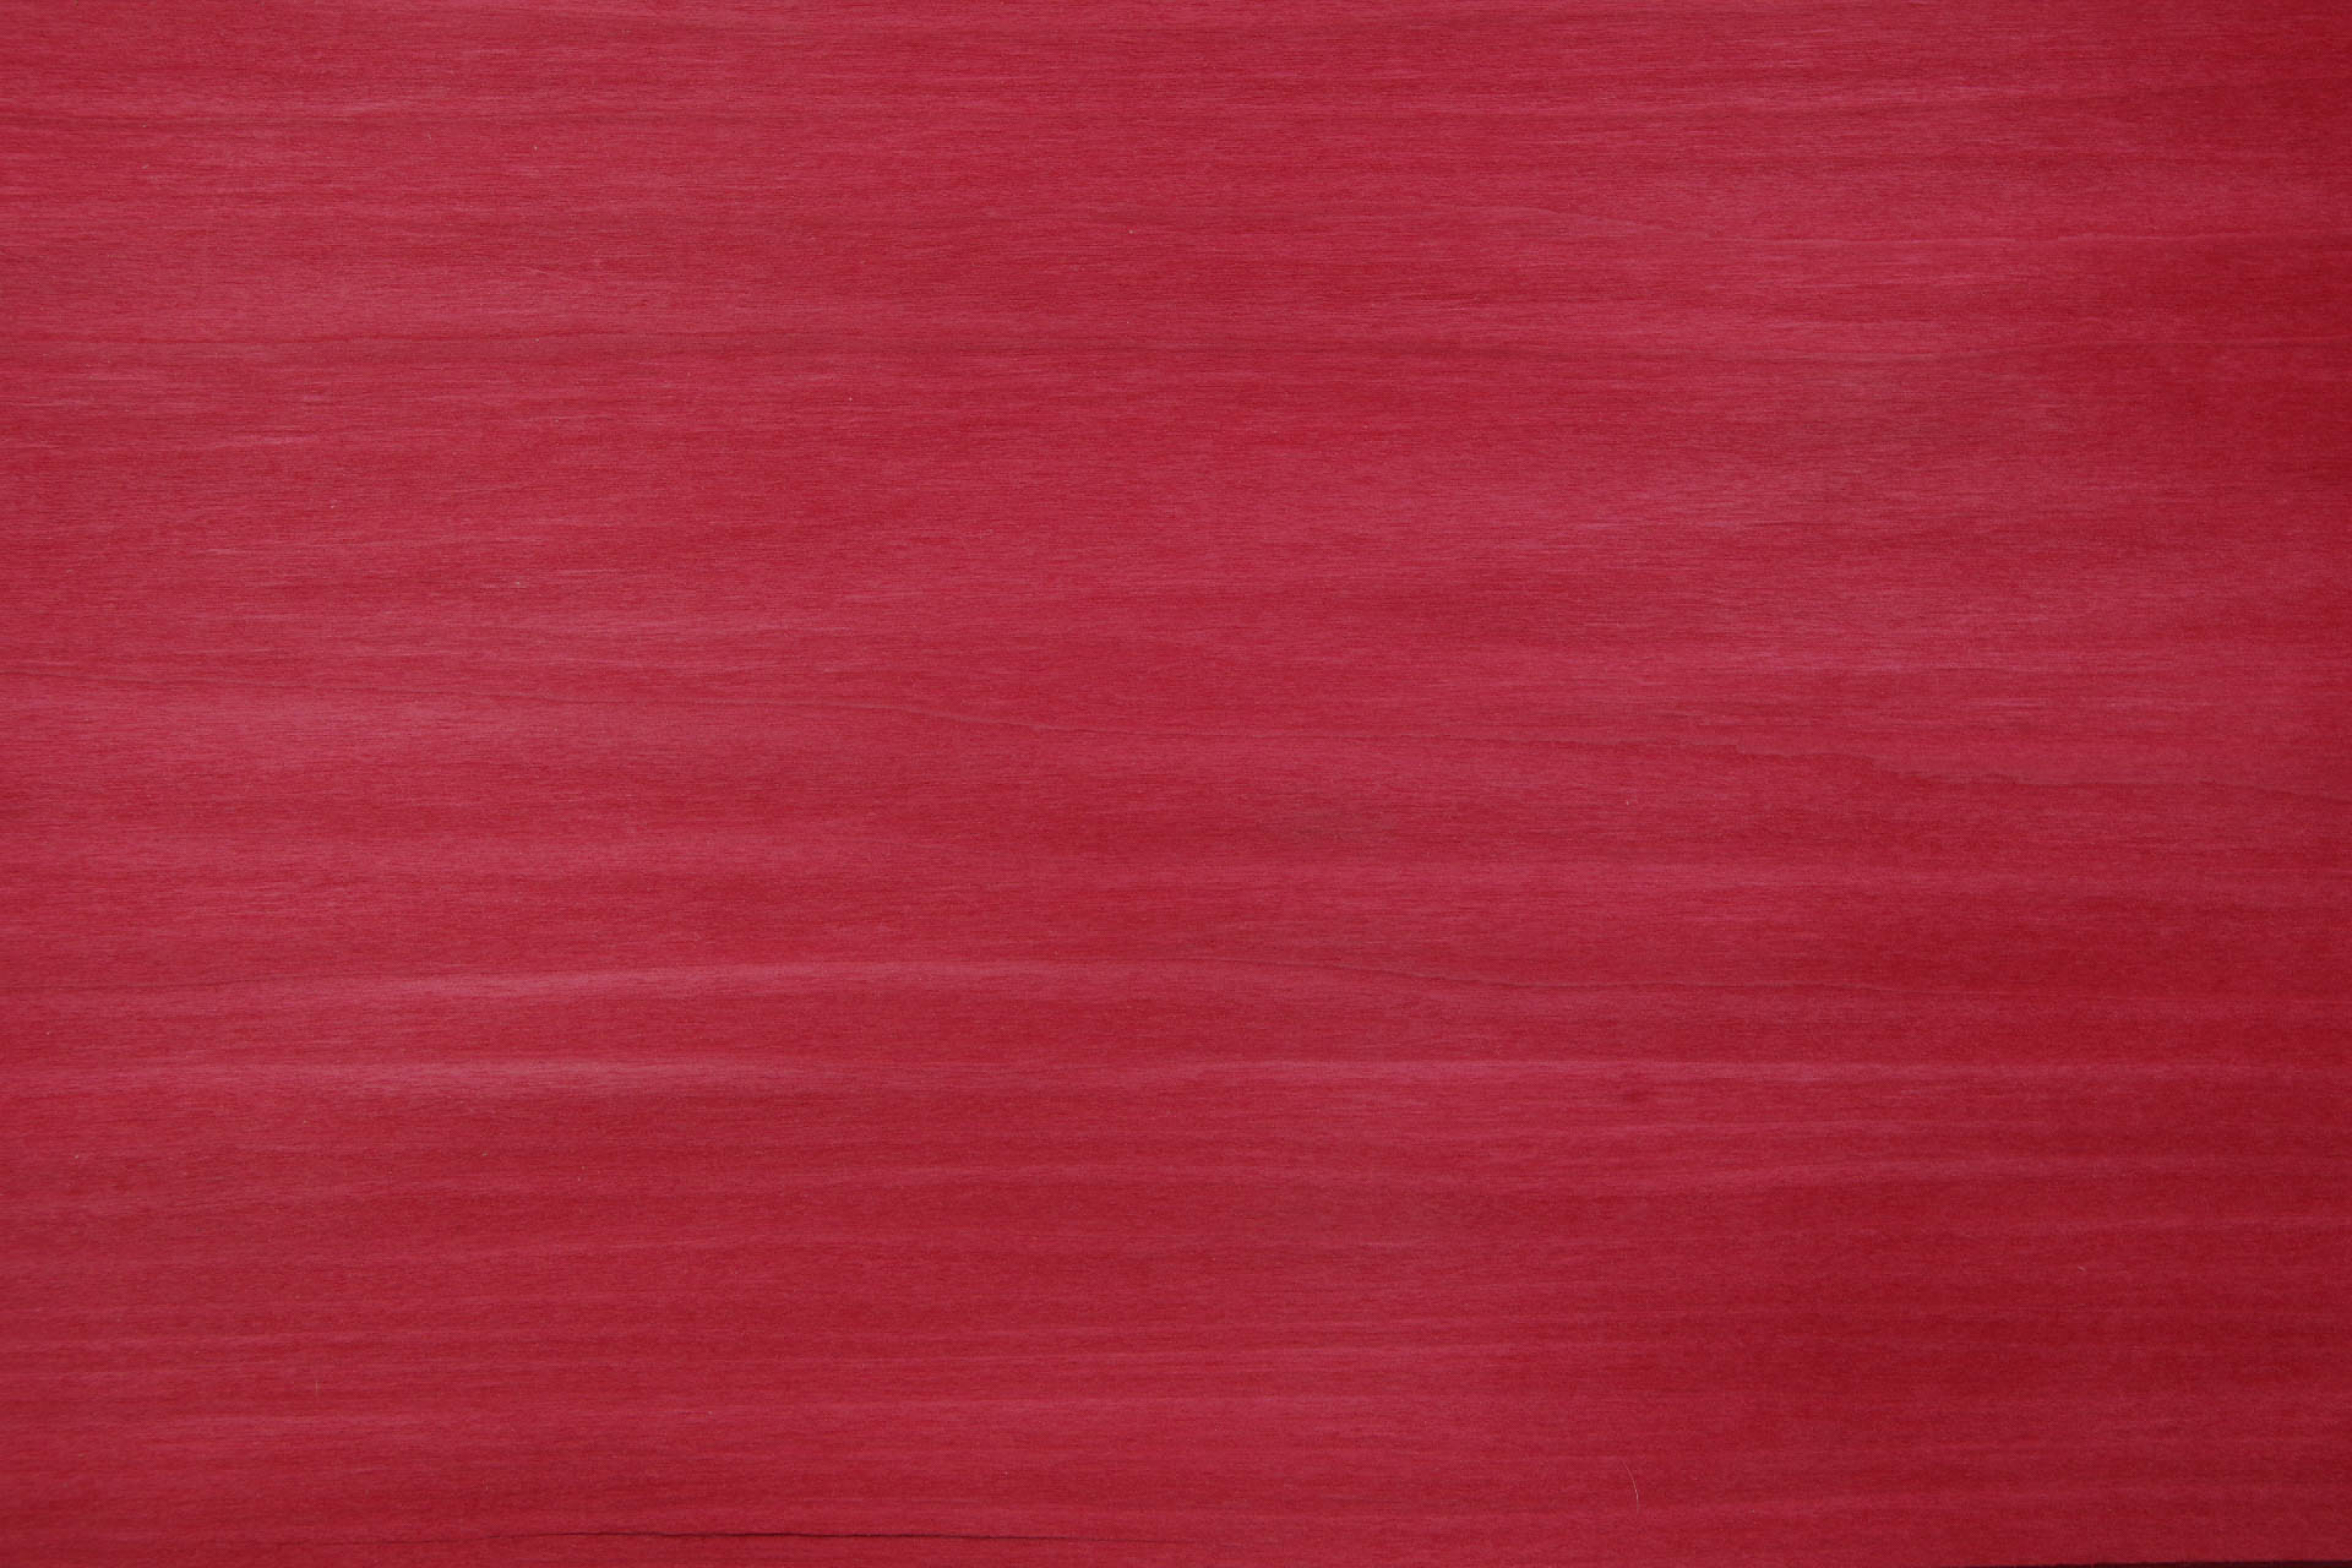 0,6mm Tulpenbaum rot gefärbtes Furnier 0,3m² U 1 118 25